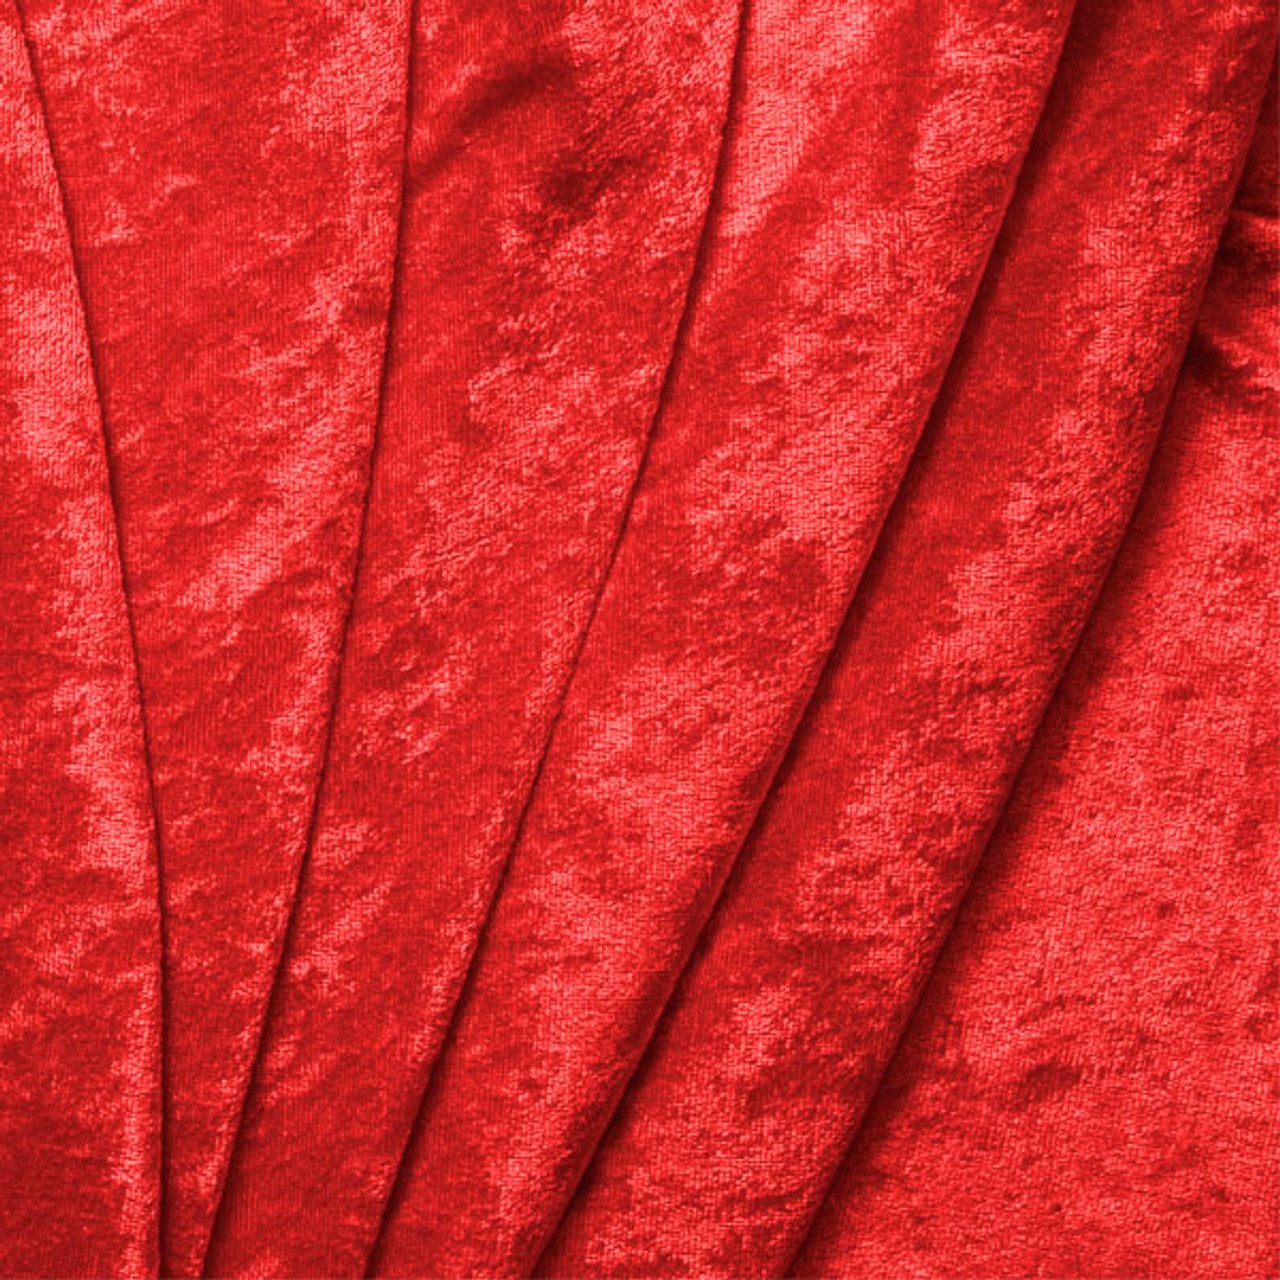 red crushed velvet fabric